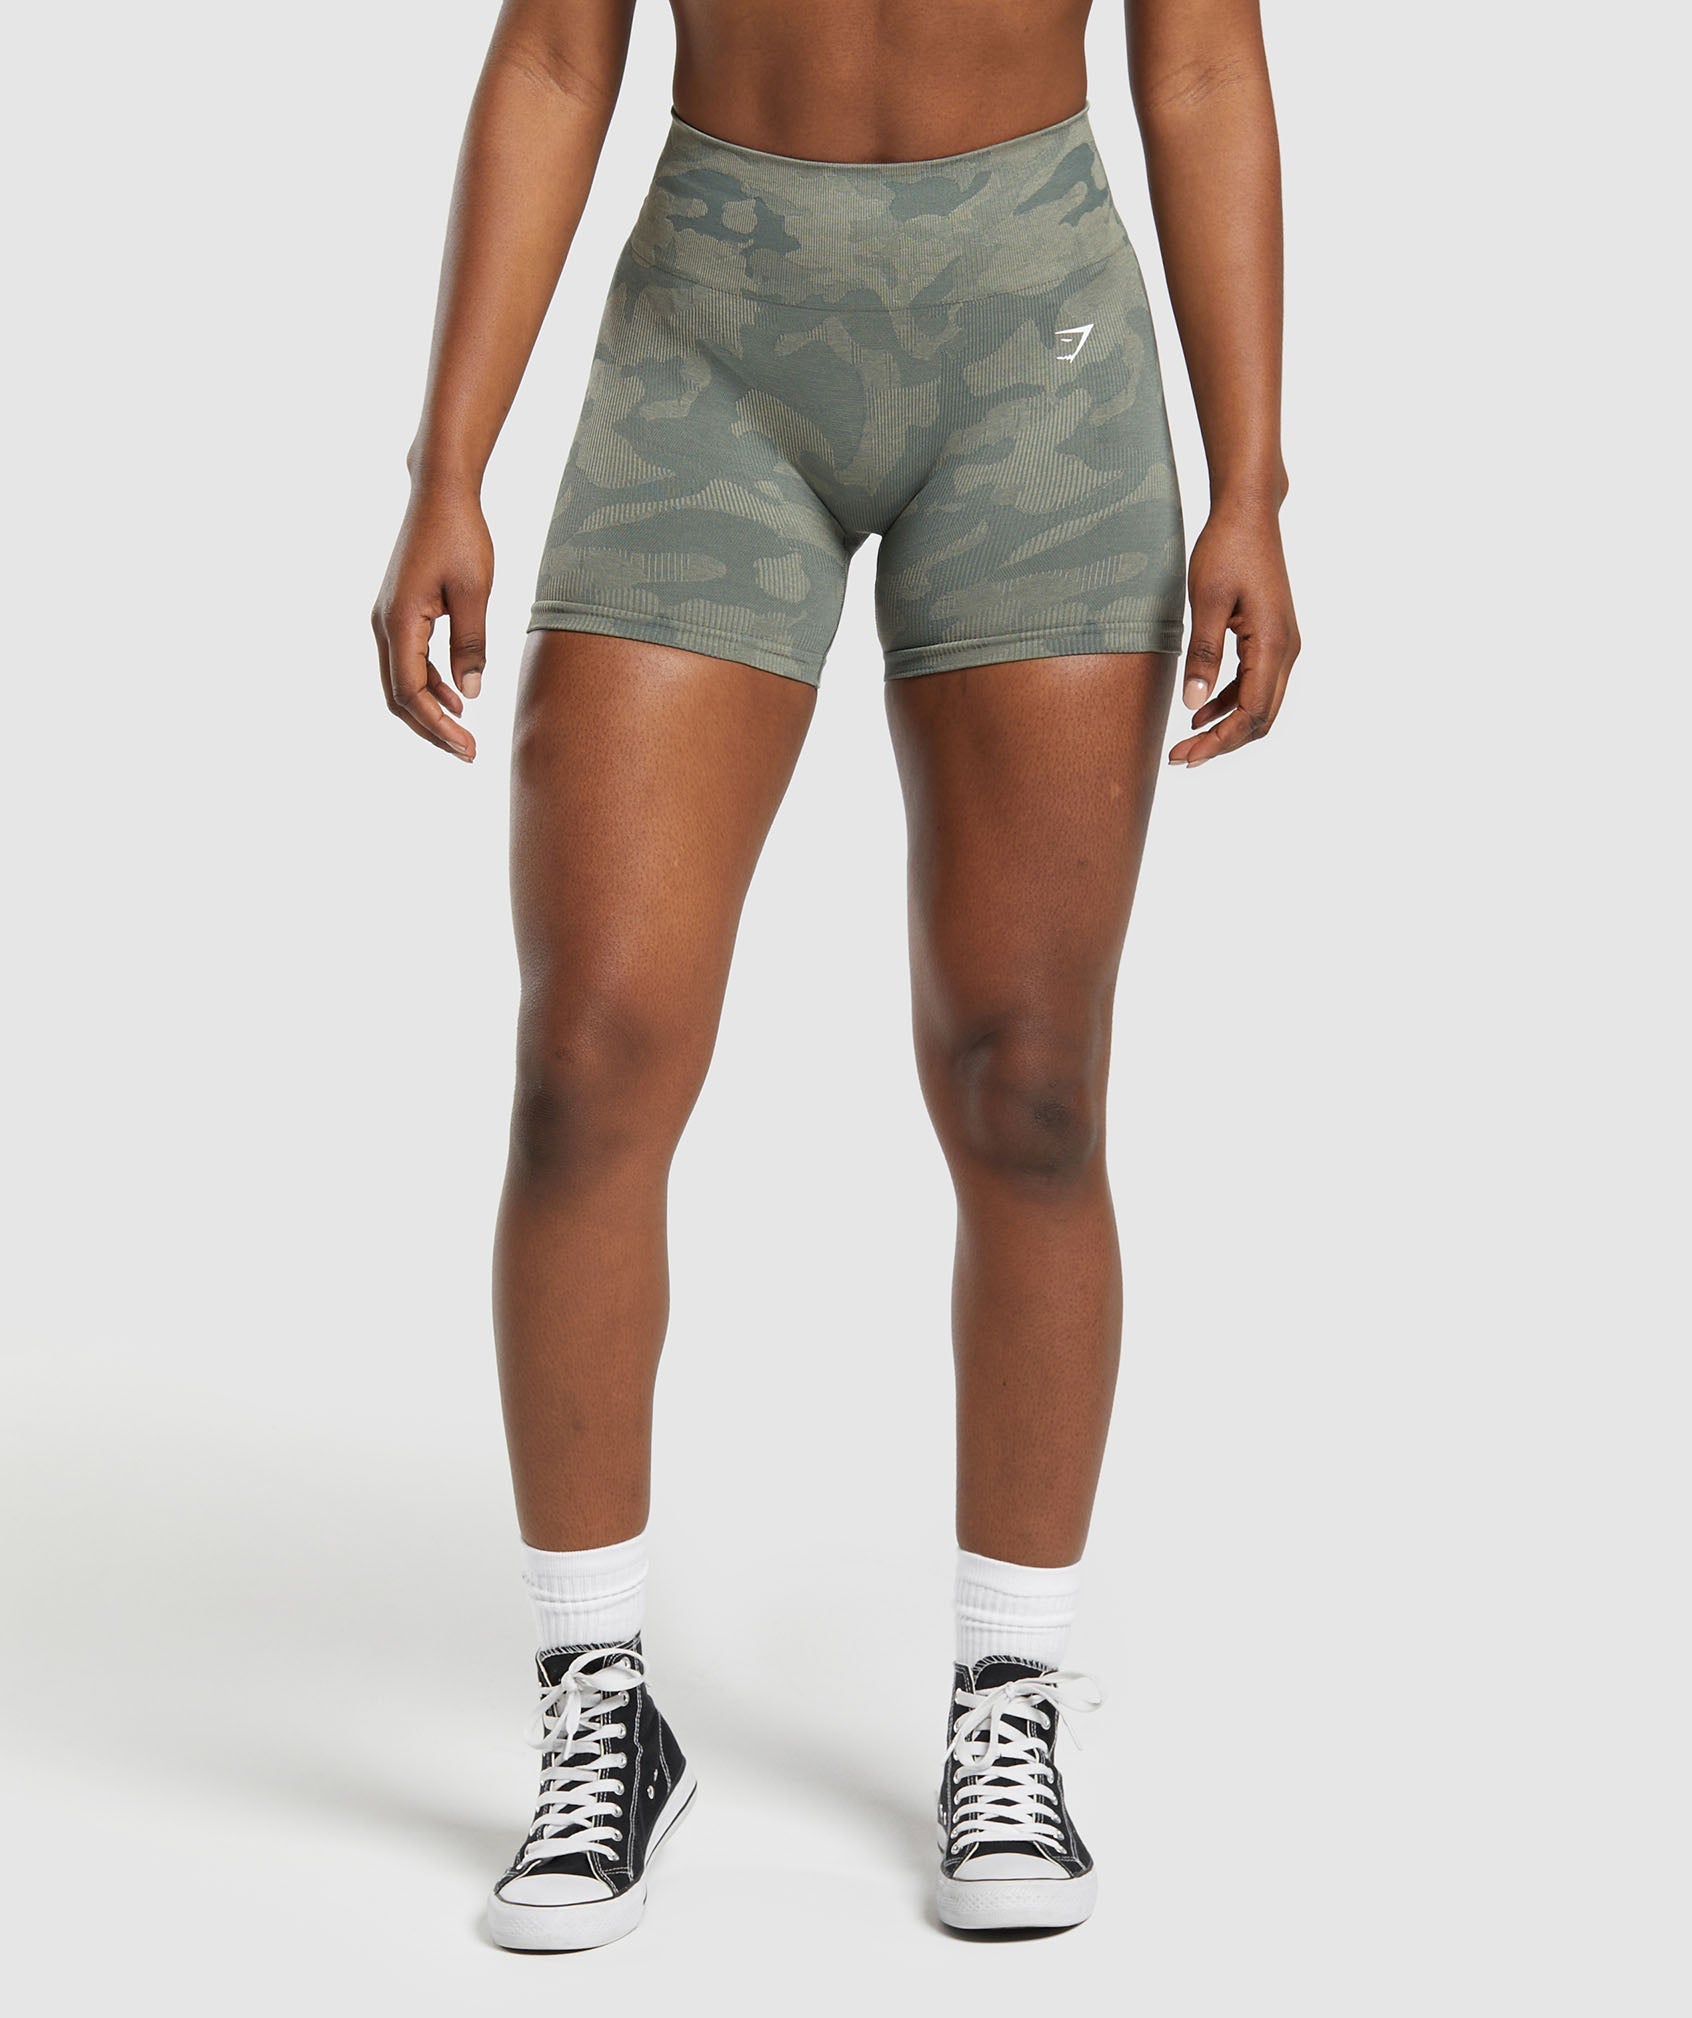 Adapt Camo Seamless Shorts in Unit Green/Chalk Green